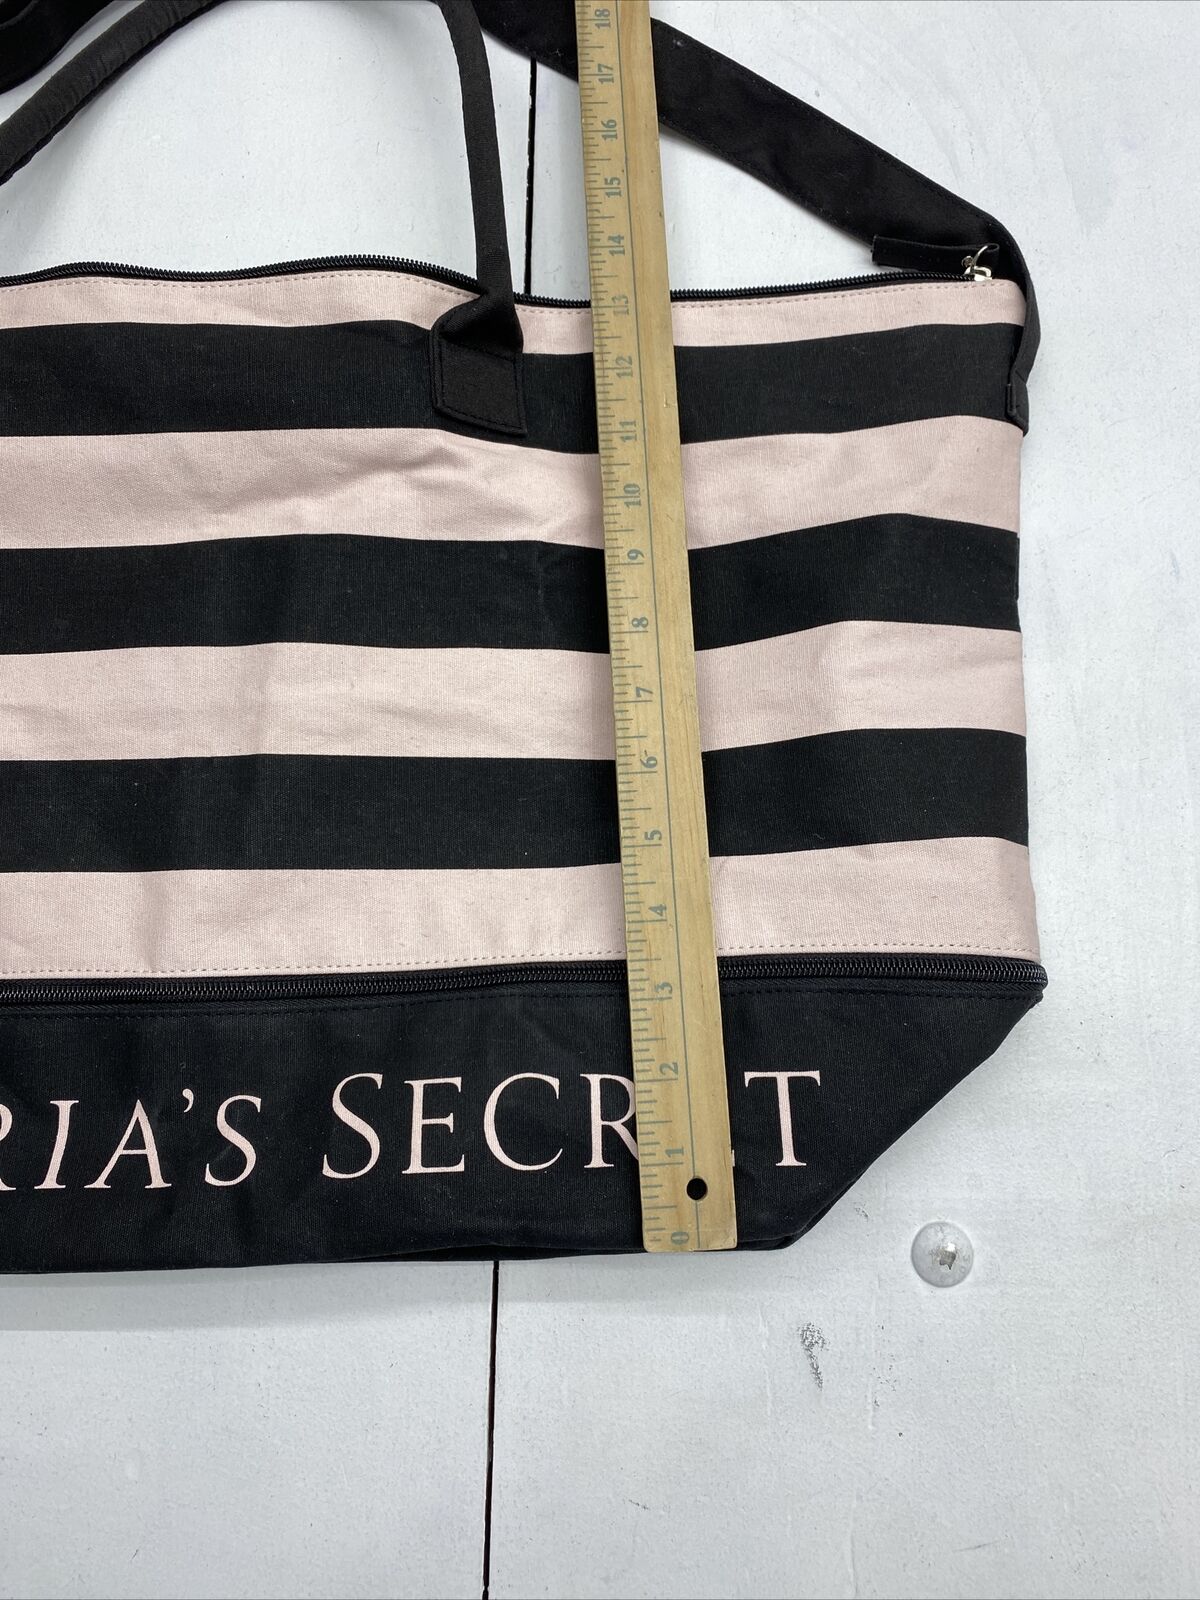 Victoria's Secret Expandable Weekender Tote Bag, Pink/Black